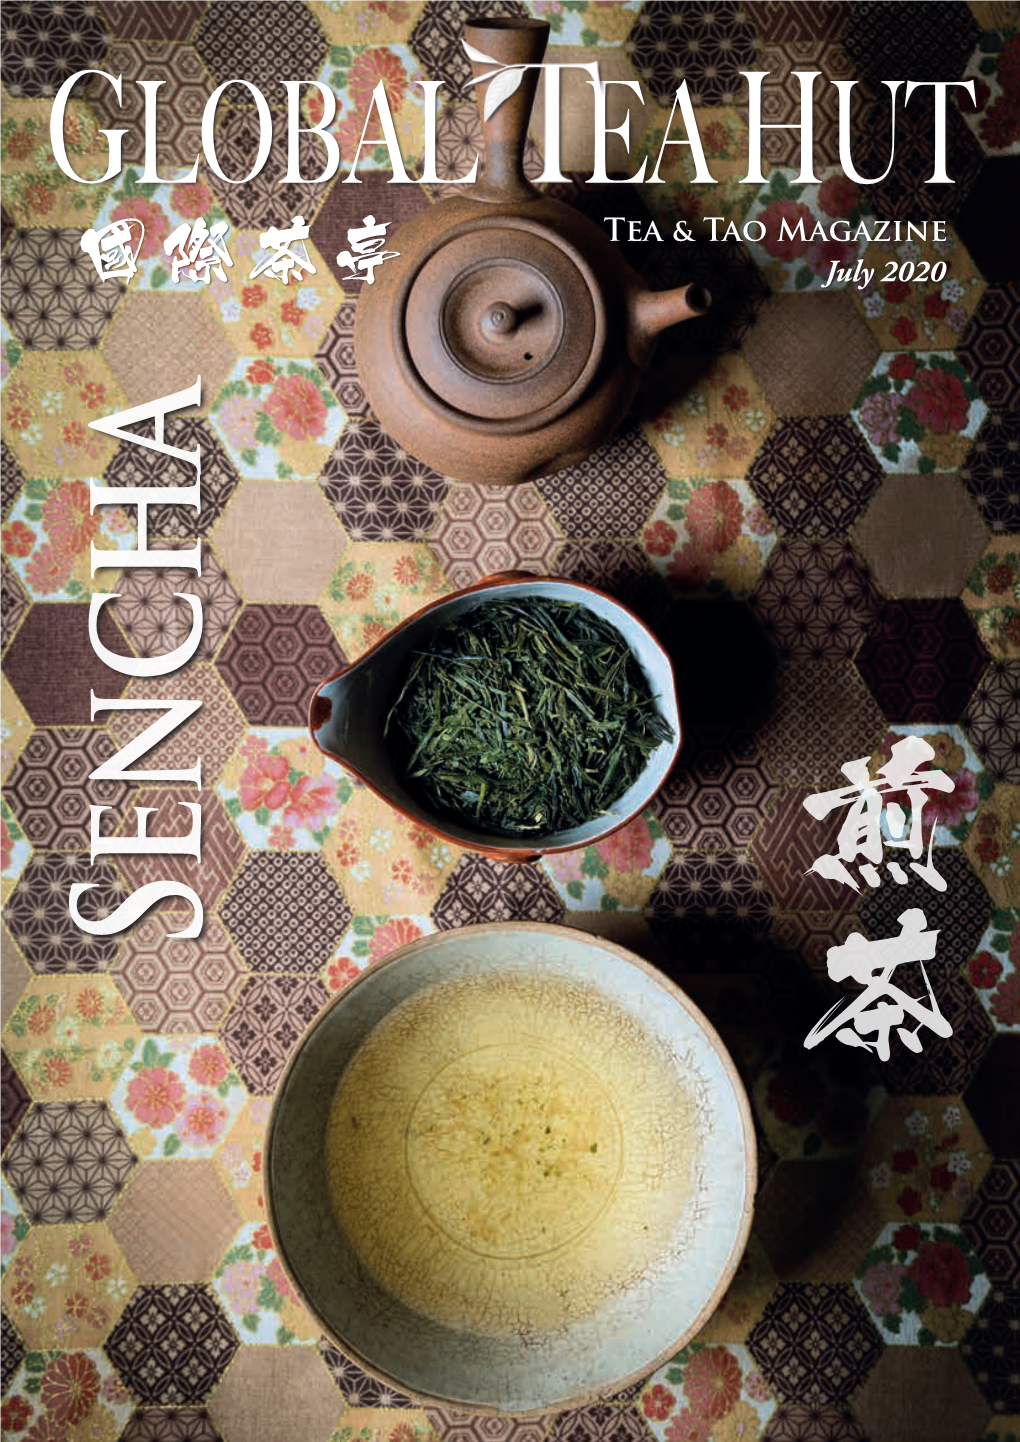 國際茶亭 July 2020 S E N C 煎 H Sencha 茶 a GLOBAL EA HUT Contentsissue 102 / July 2020 Tea & Tao Magazine Jade玉液 Sap